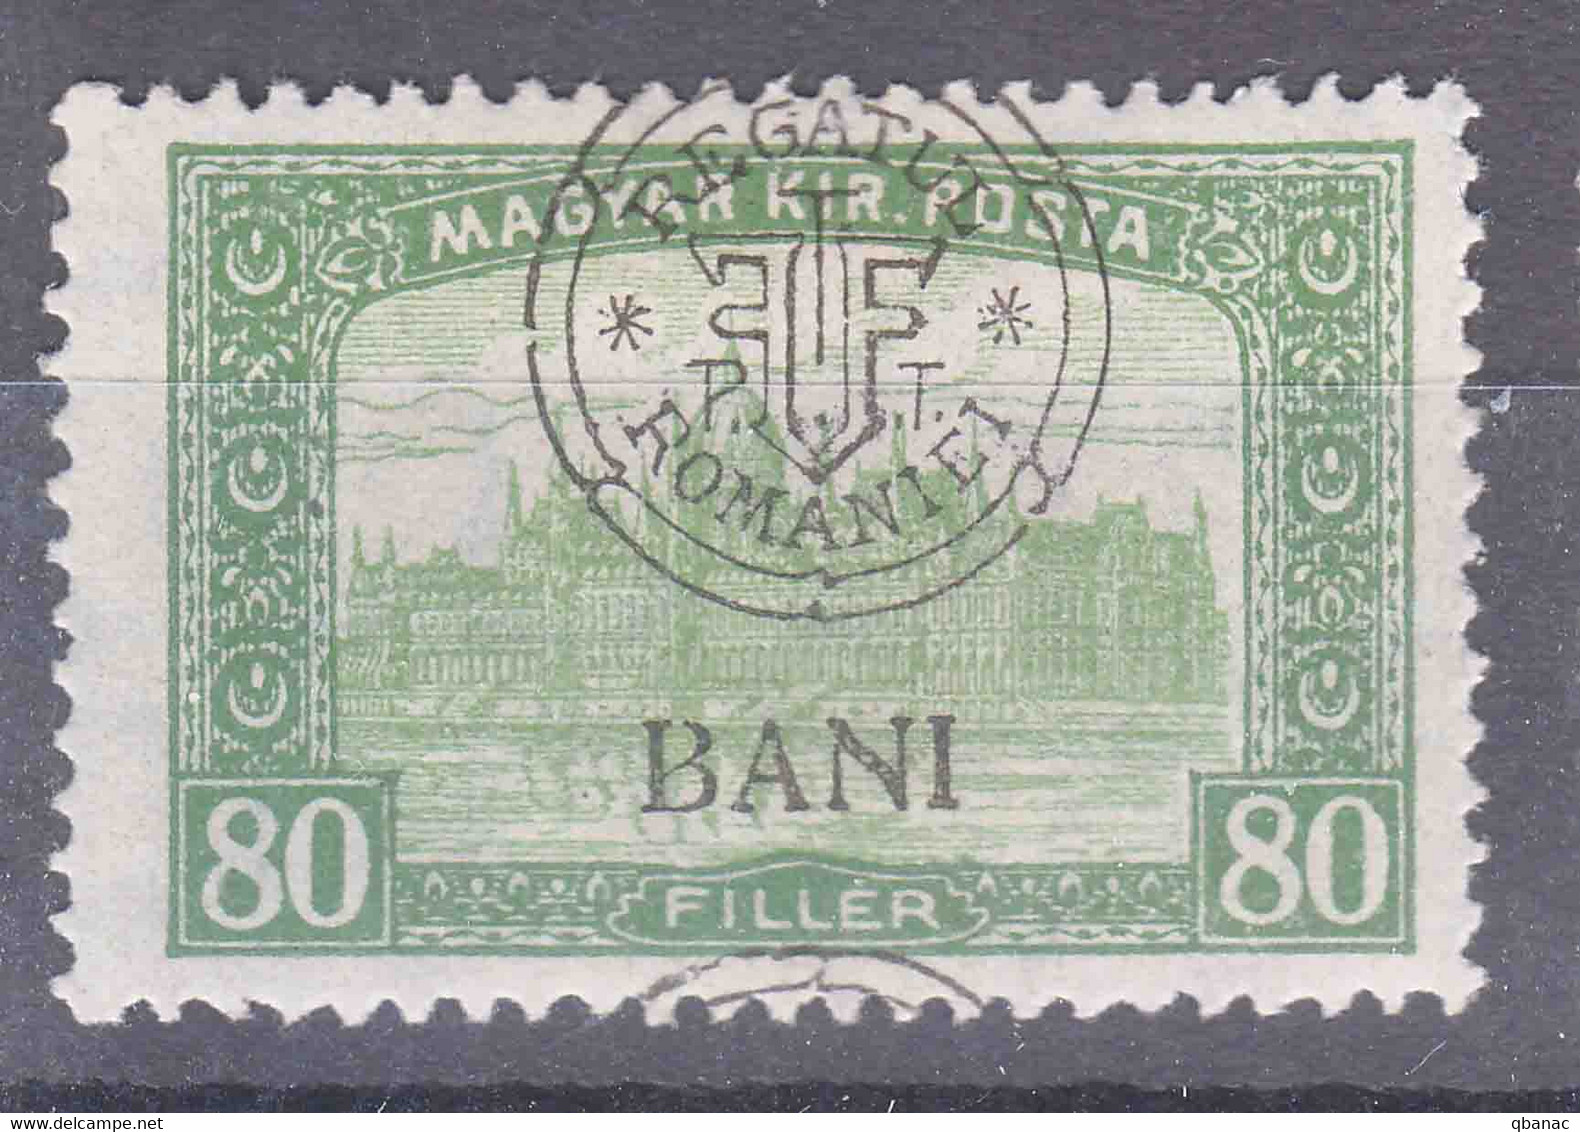 Romania Overprint On Hungary Stamps Occupation Transylvania 1919 Mi#39 I Mint Hinged, Moved Overprint - Transylvania